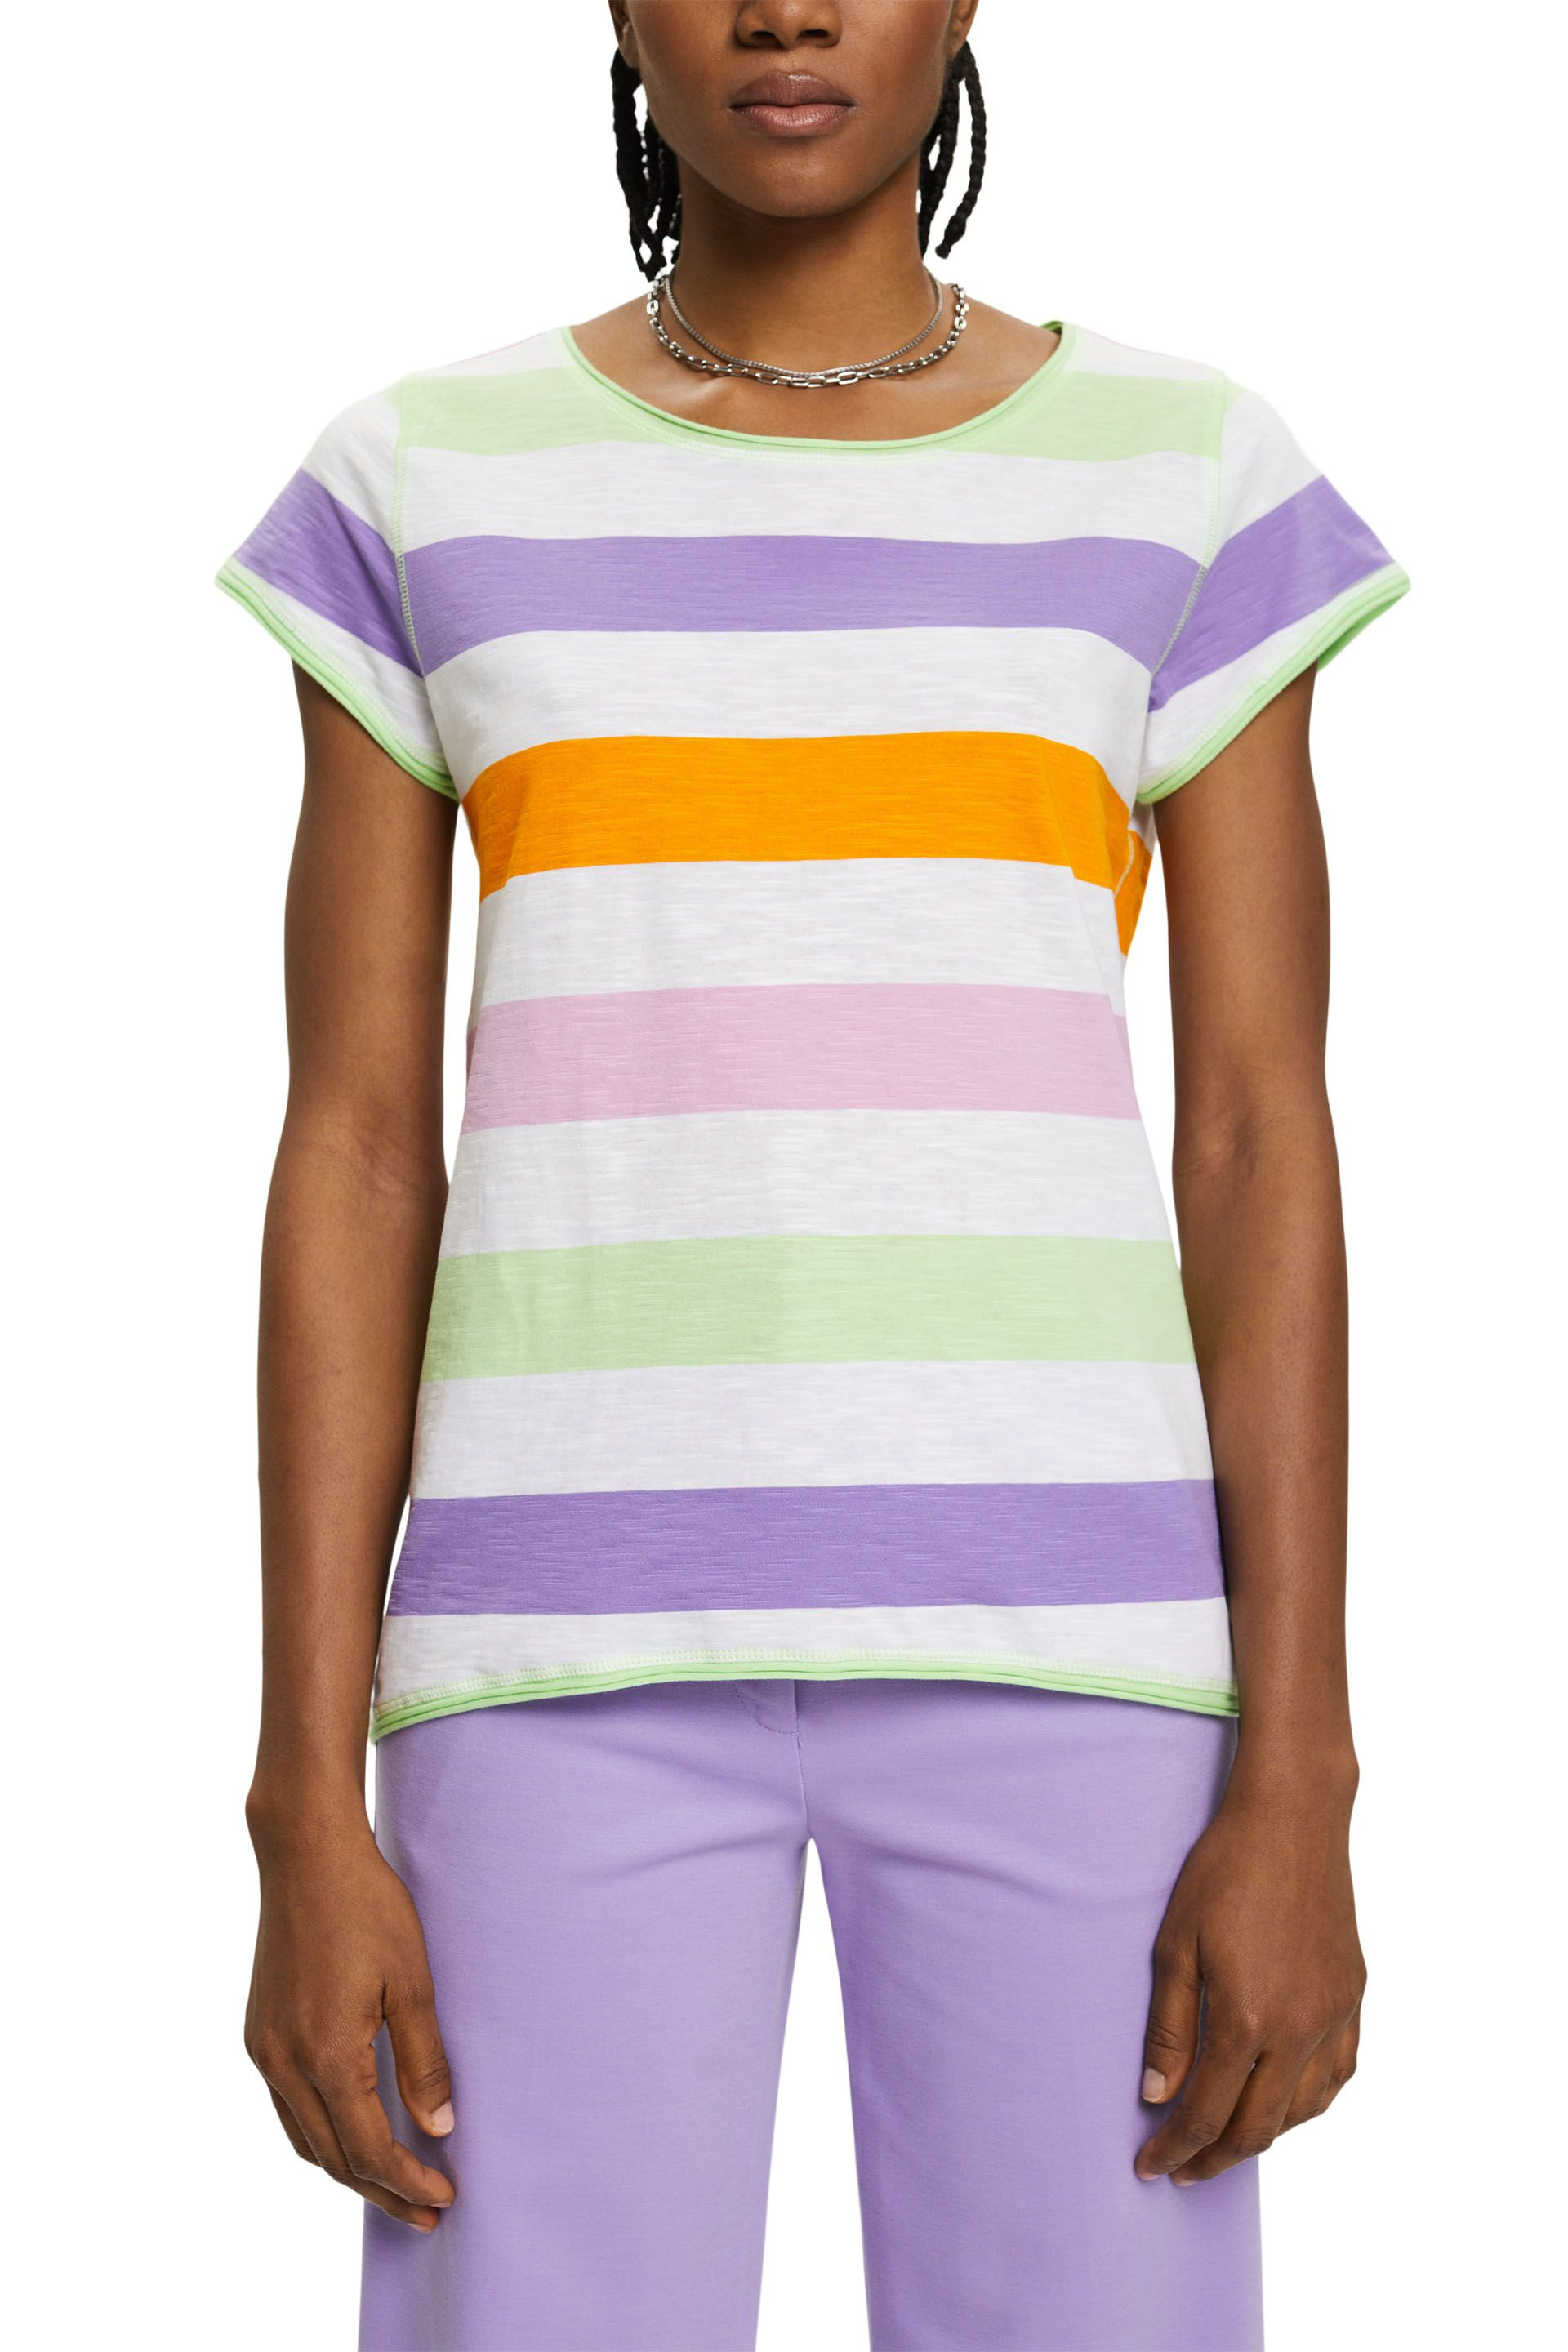 Esprit - Striped T-Shirt, Multicolor, large image number 2